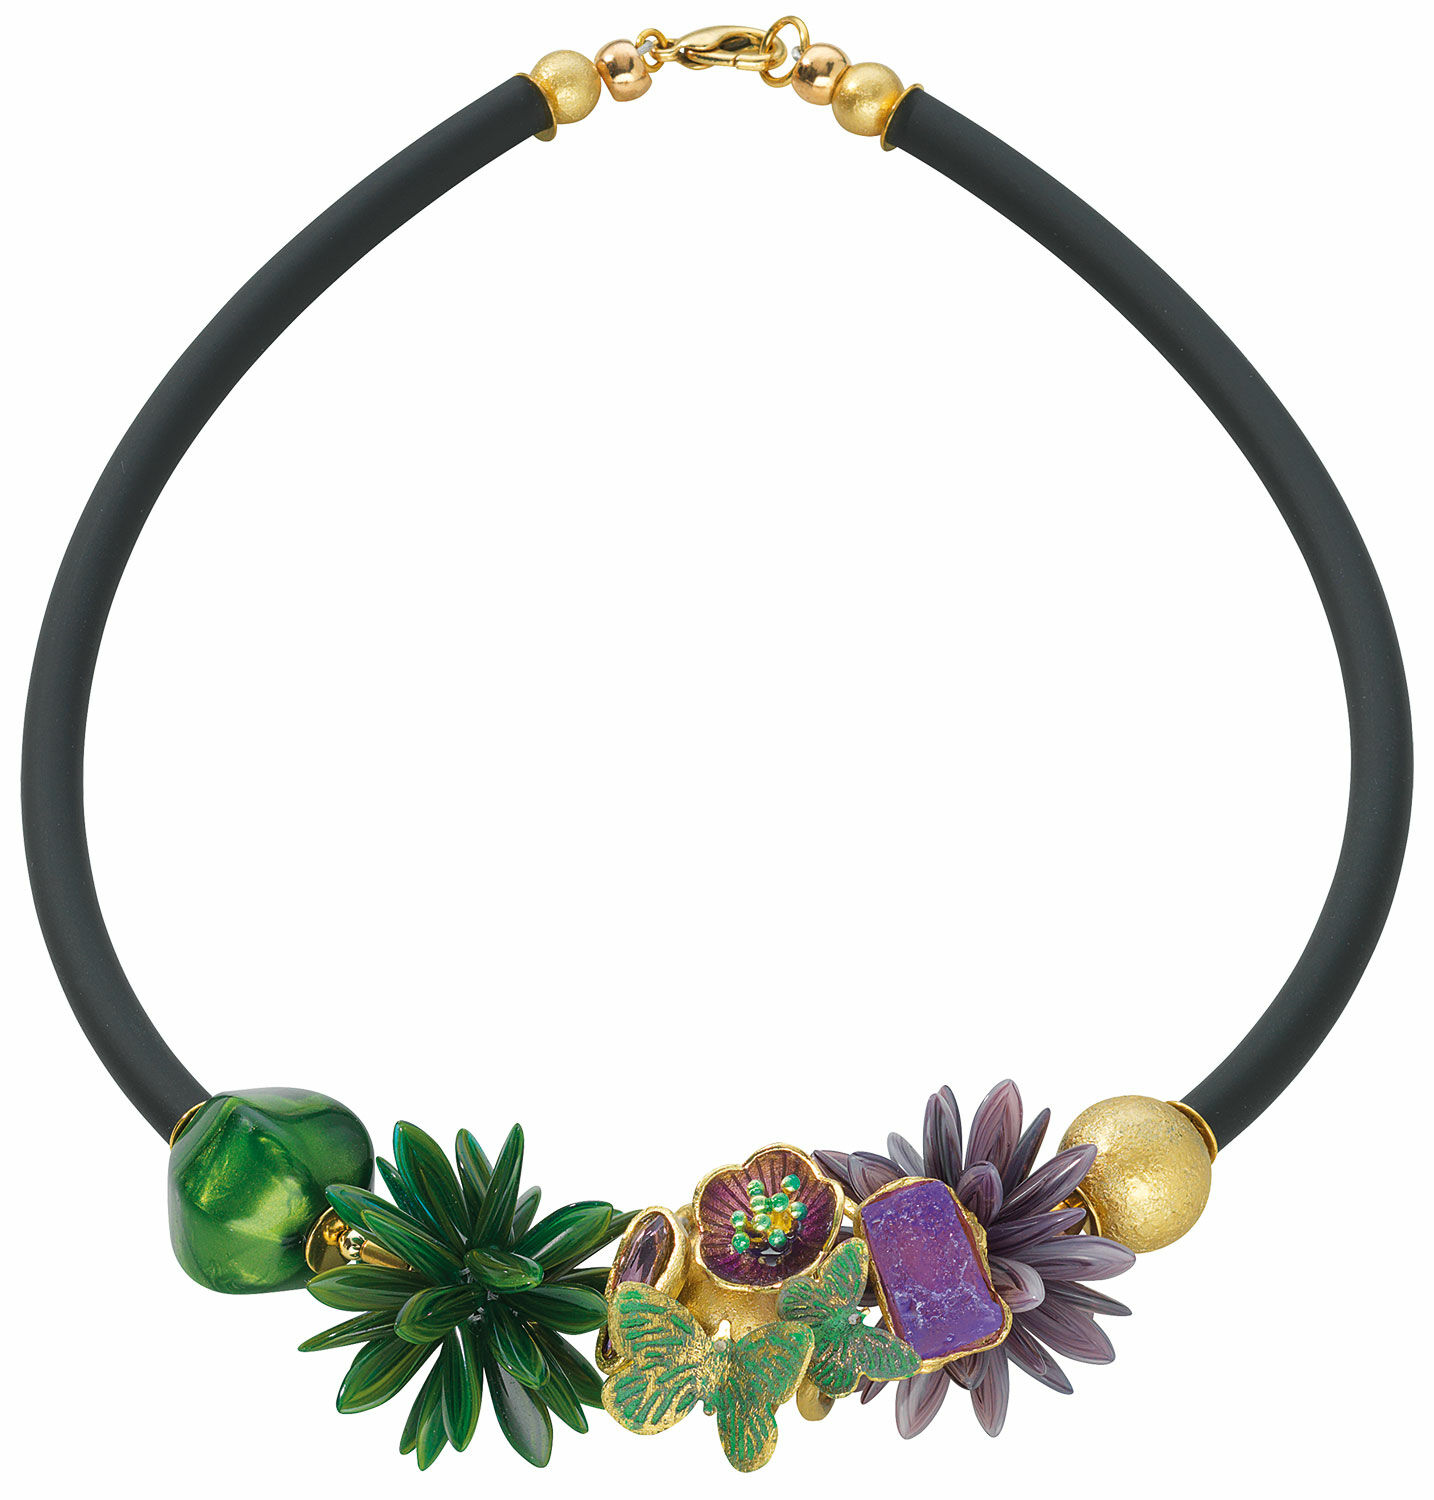 Necklace "Dahlia" by Anna Mütz